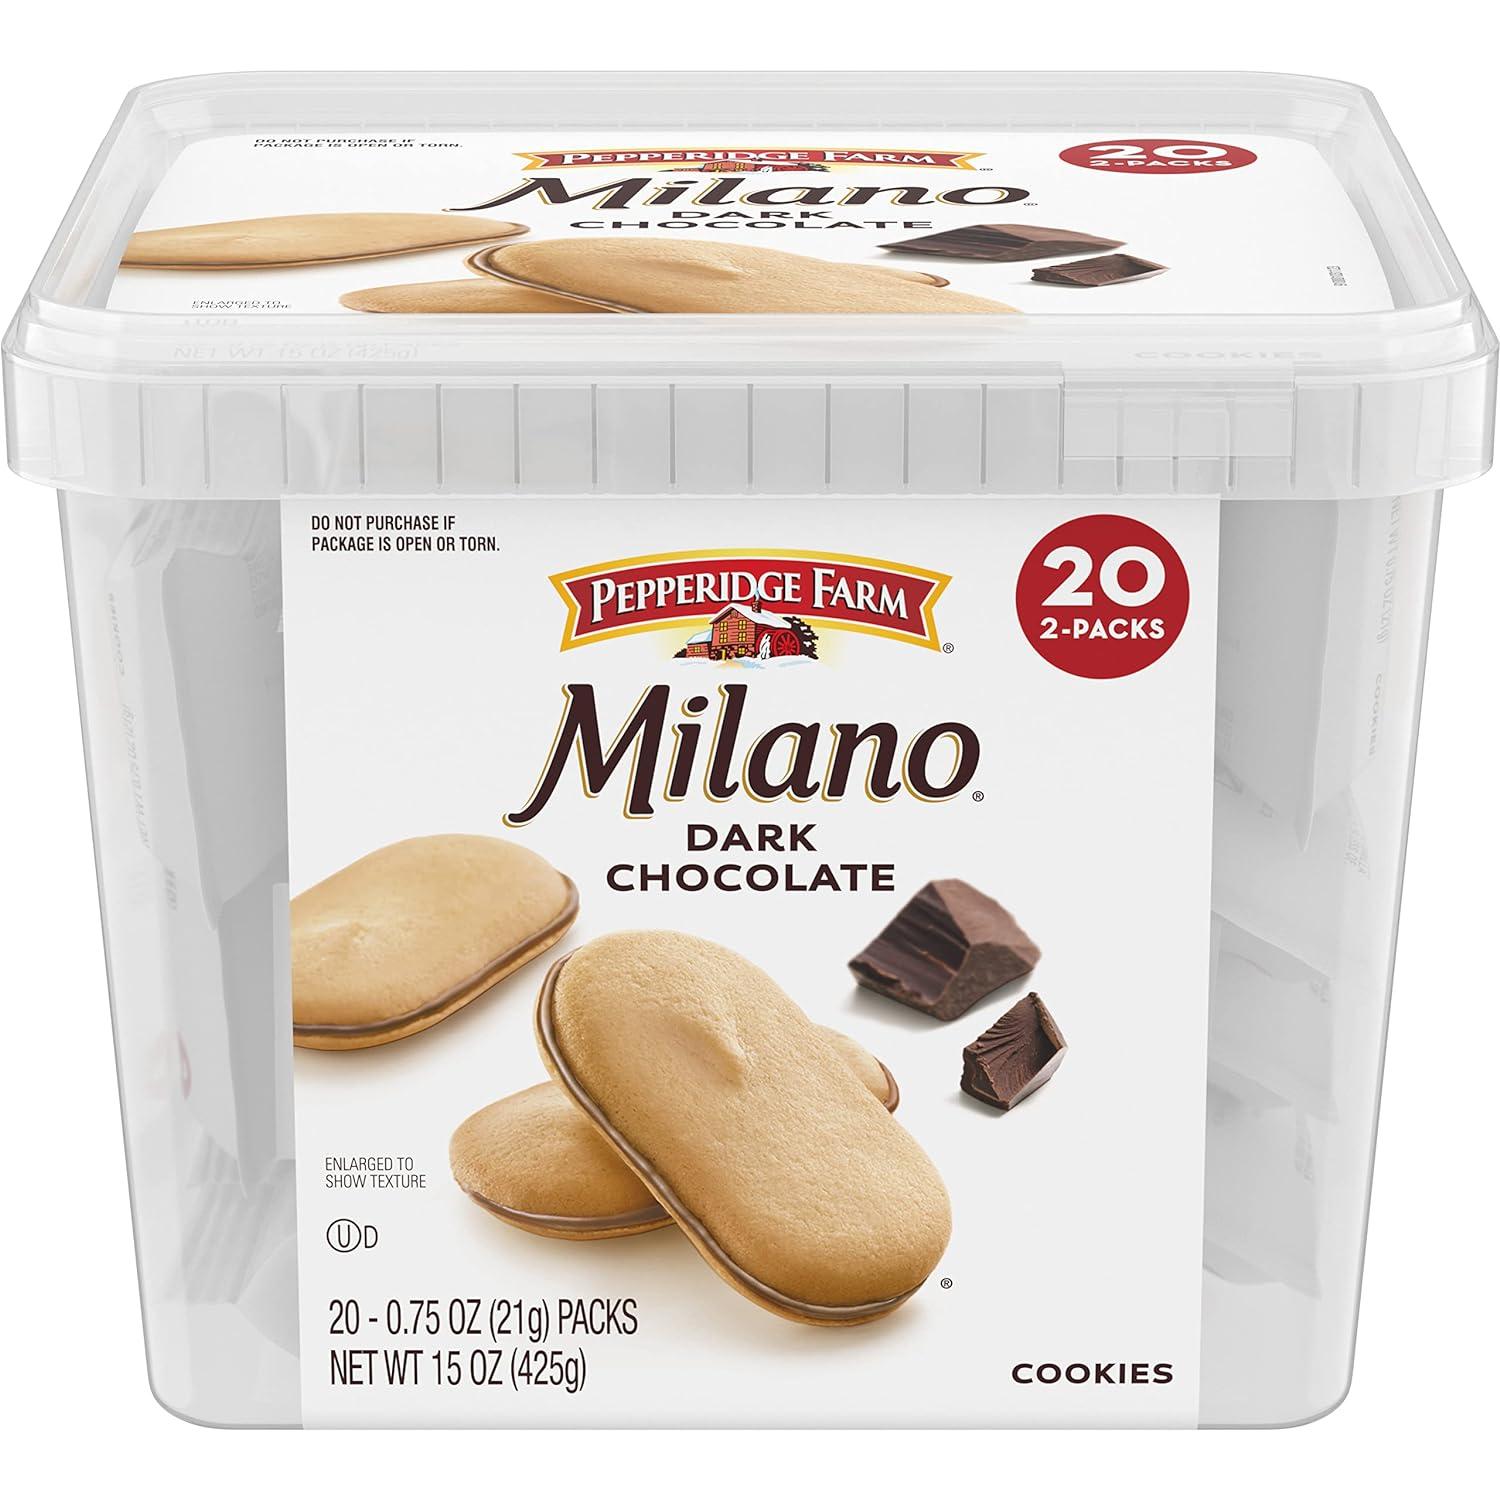 Pepperidge Farm Milano Dark Chocolate Cookie Packs for $7.74